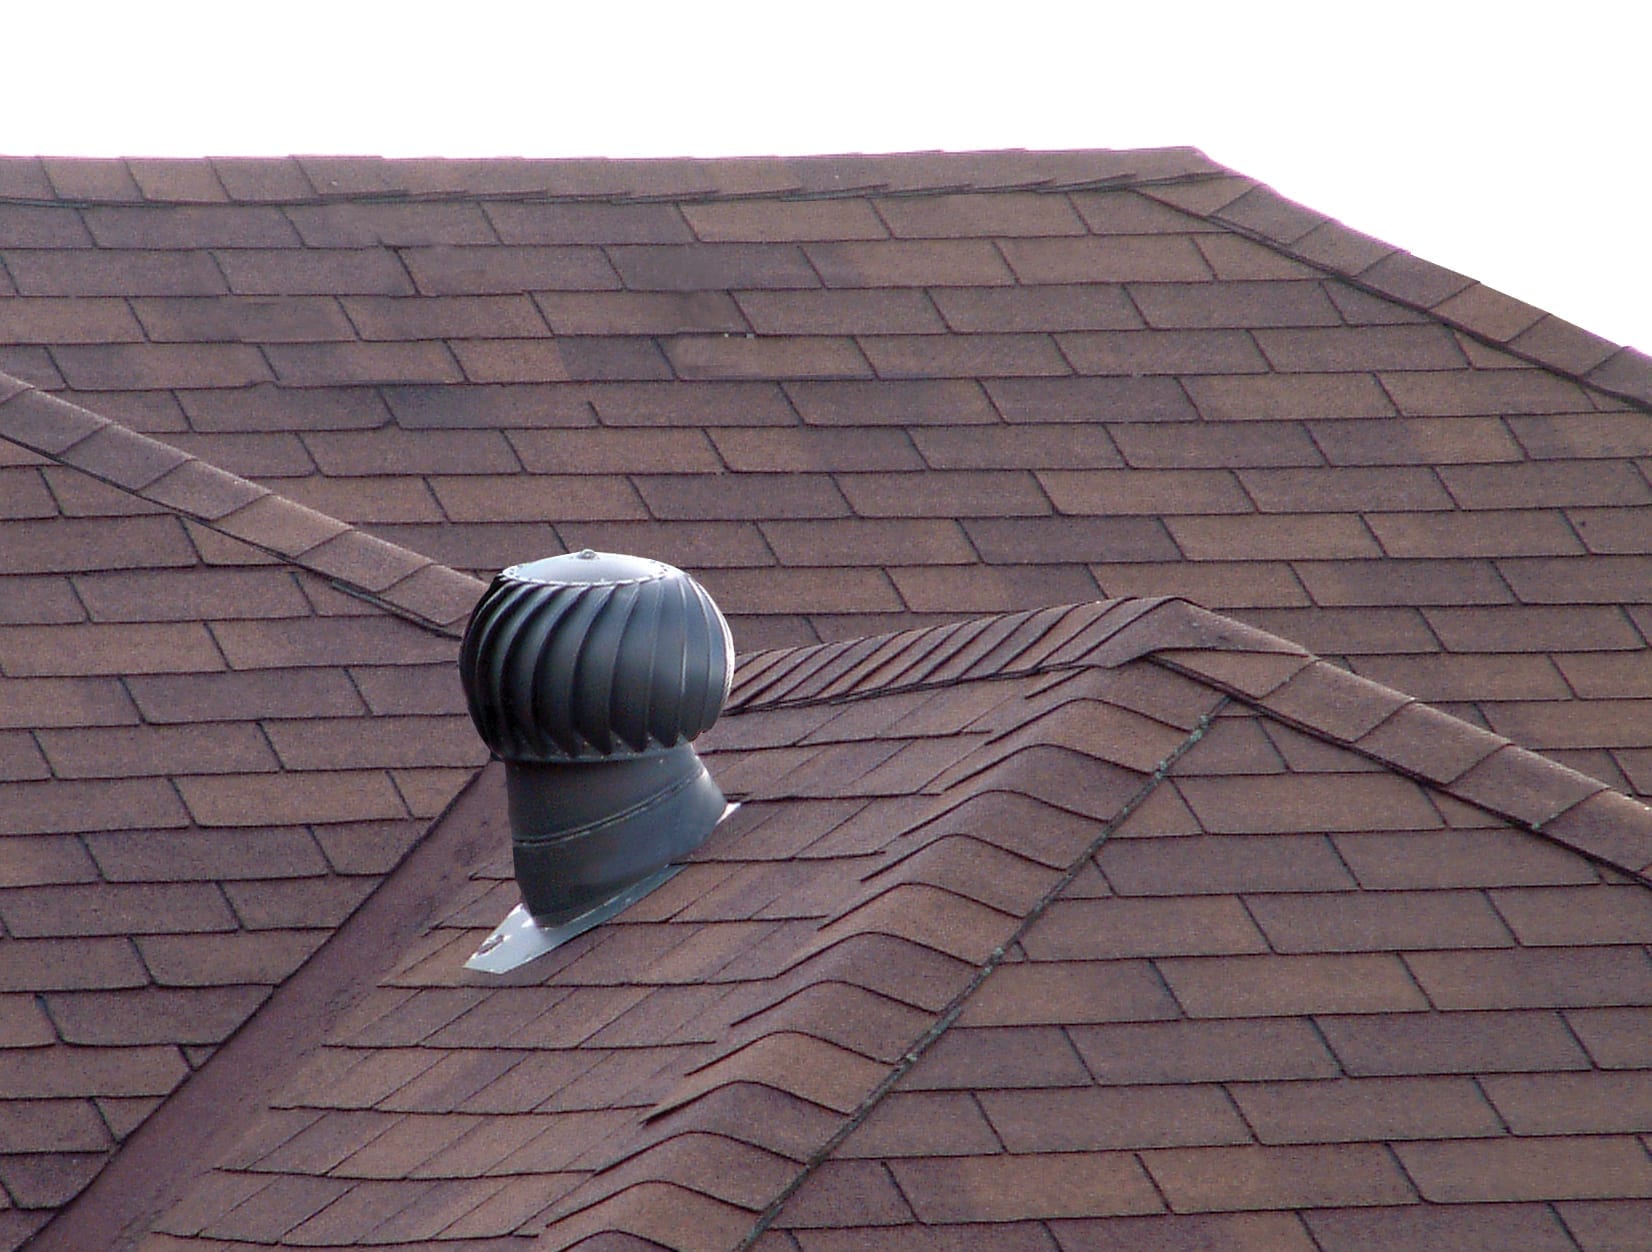 turbine vent on shingle roof